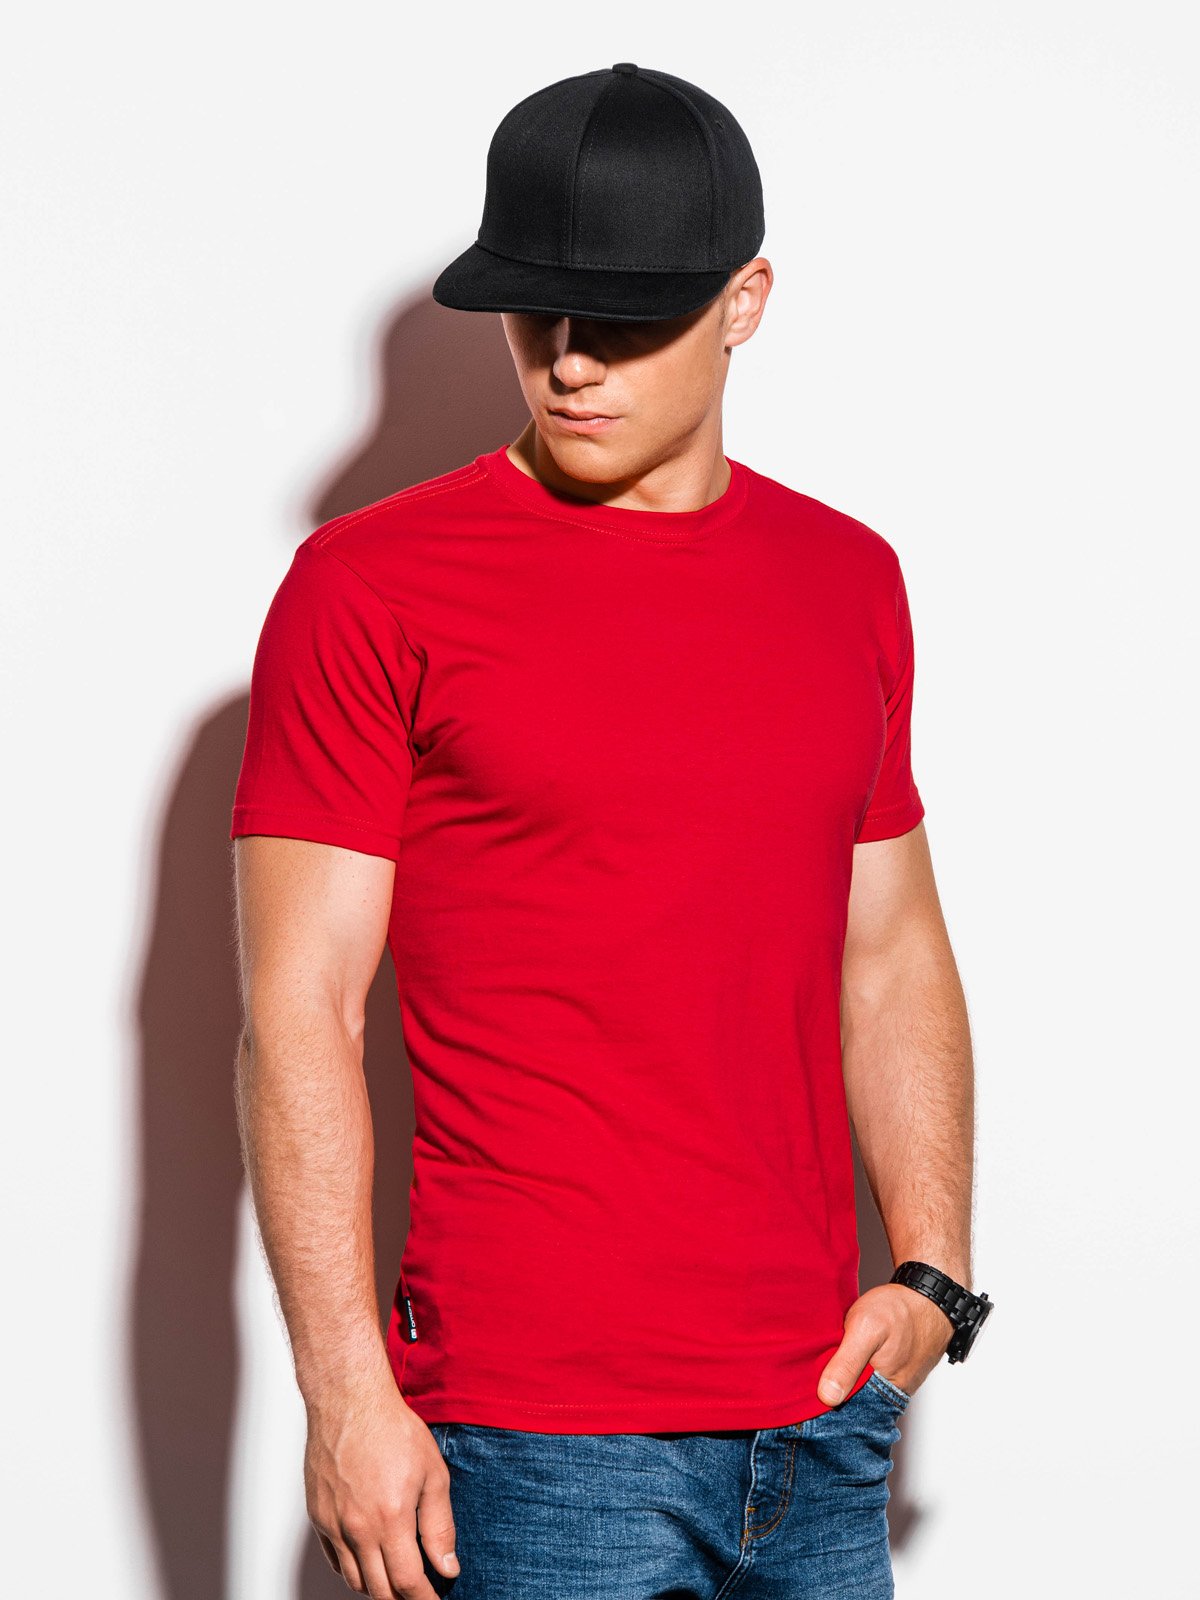 desinficere Forræderi by Men's basic t-shirt S884 - red | MODONE wholesale - Clothing For Men